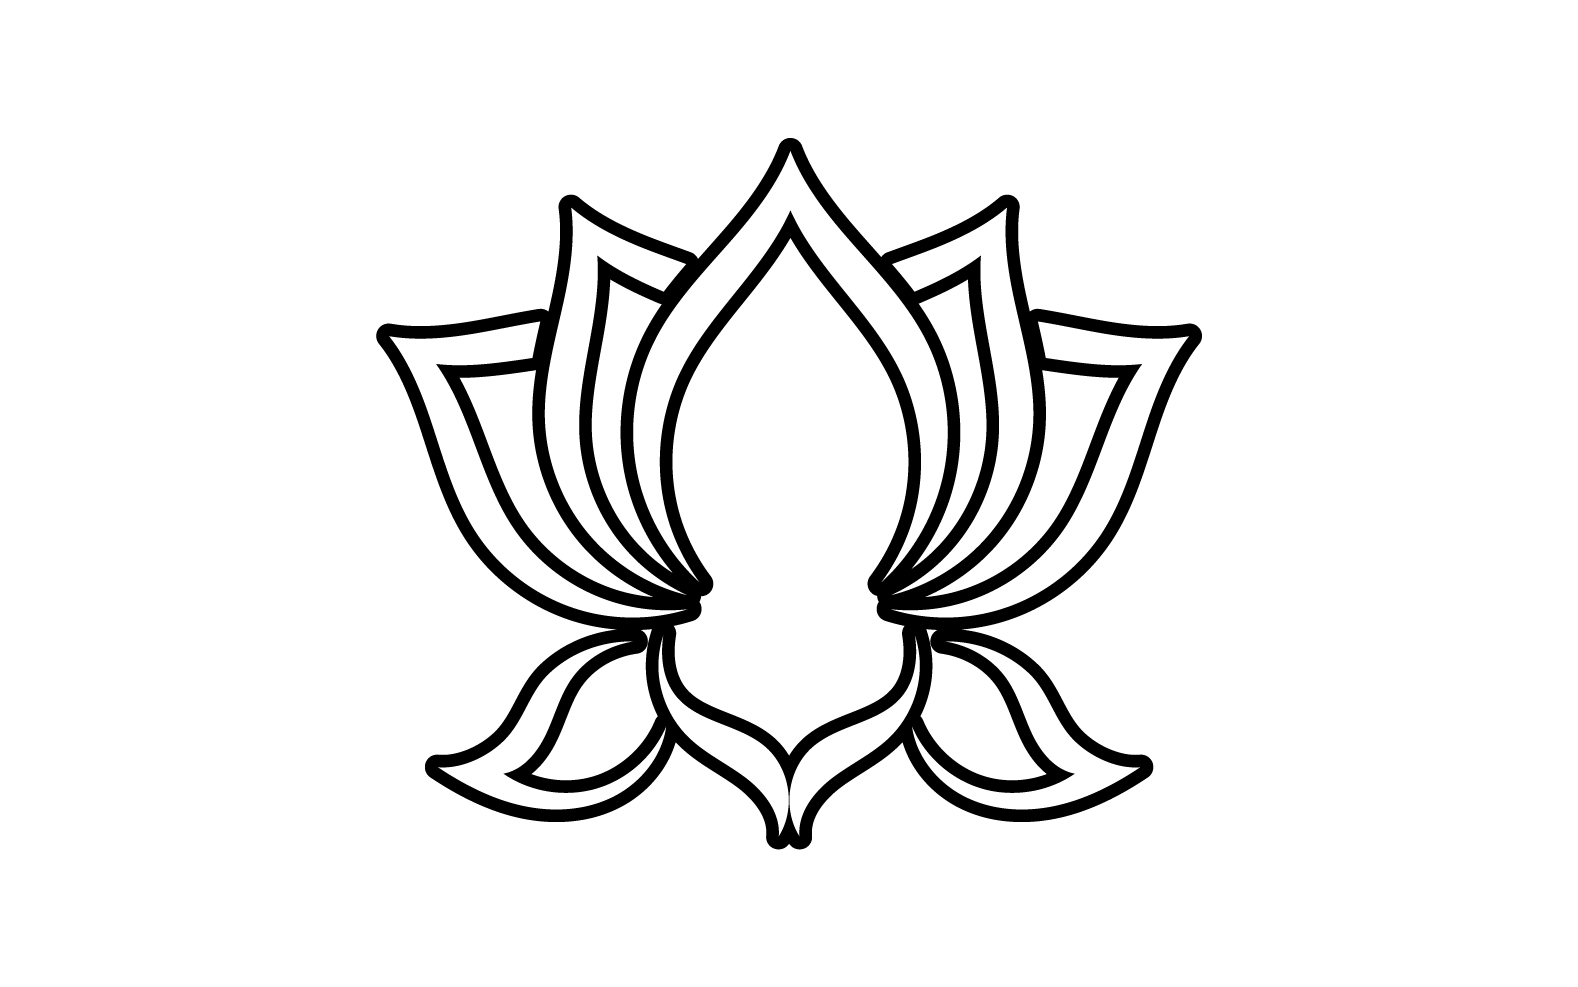 Flower lotus yoga symbol vector design company name v49